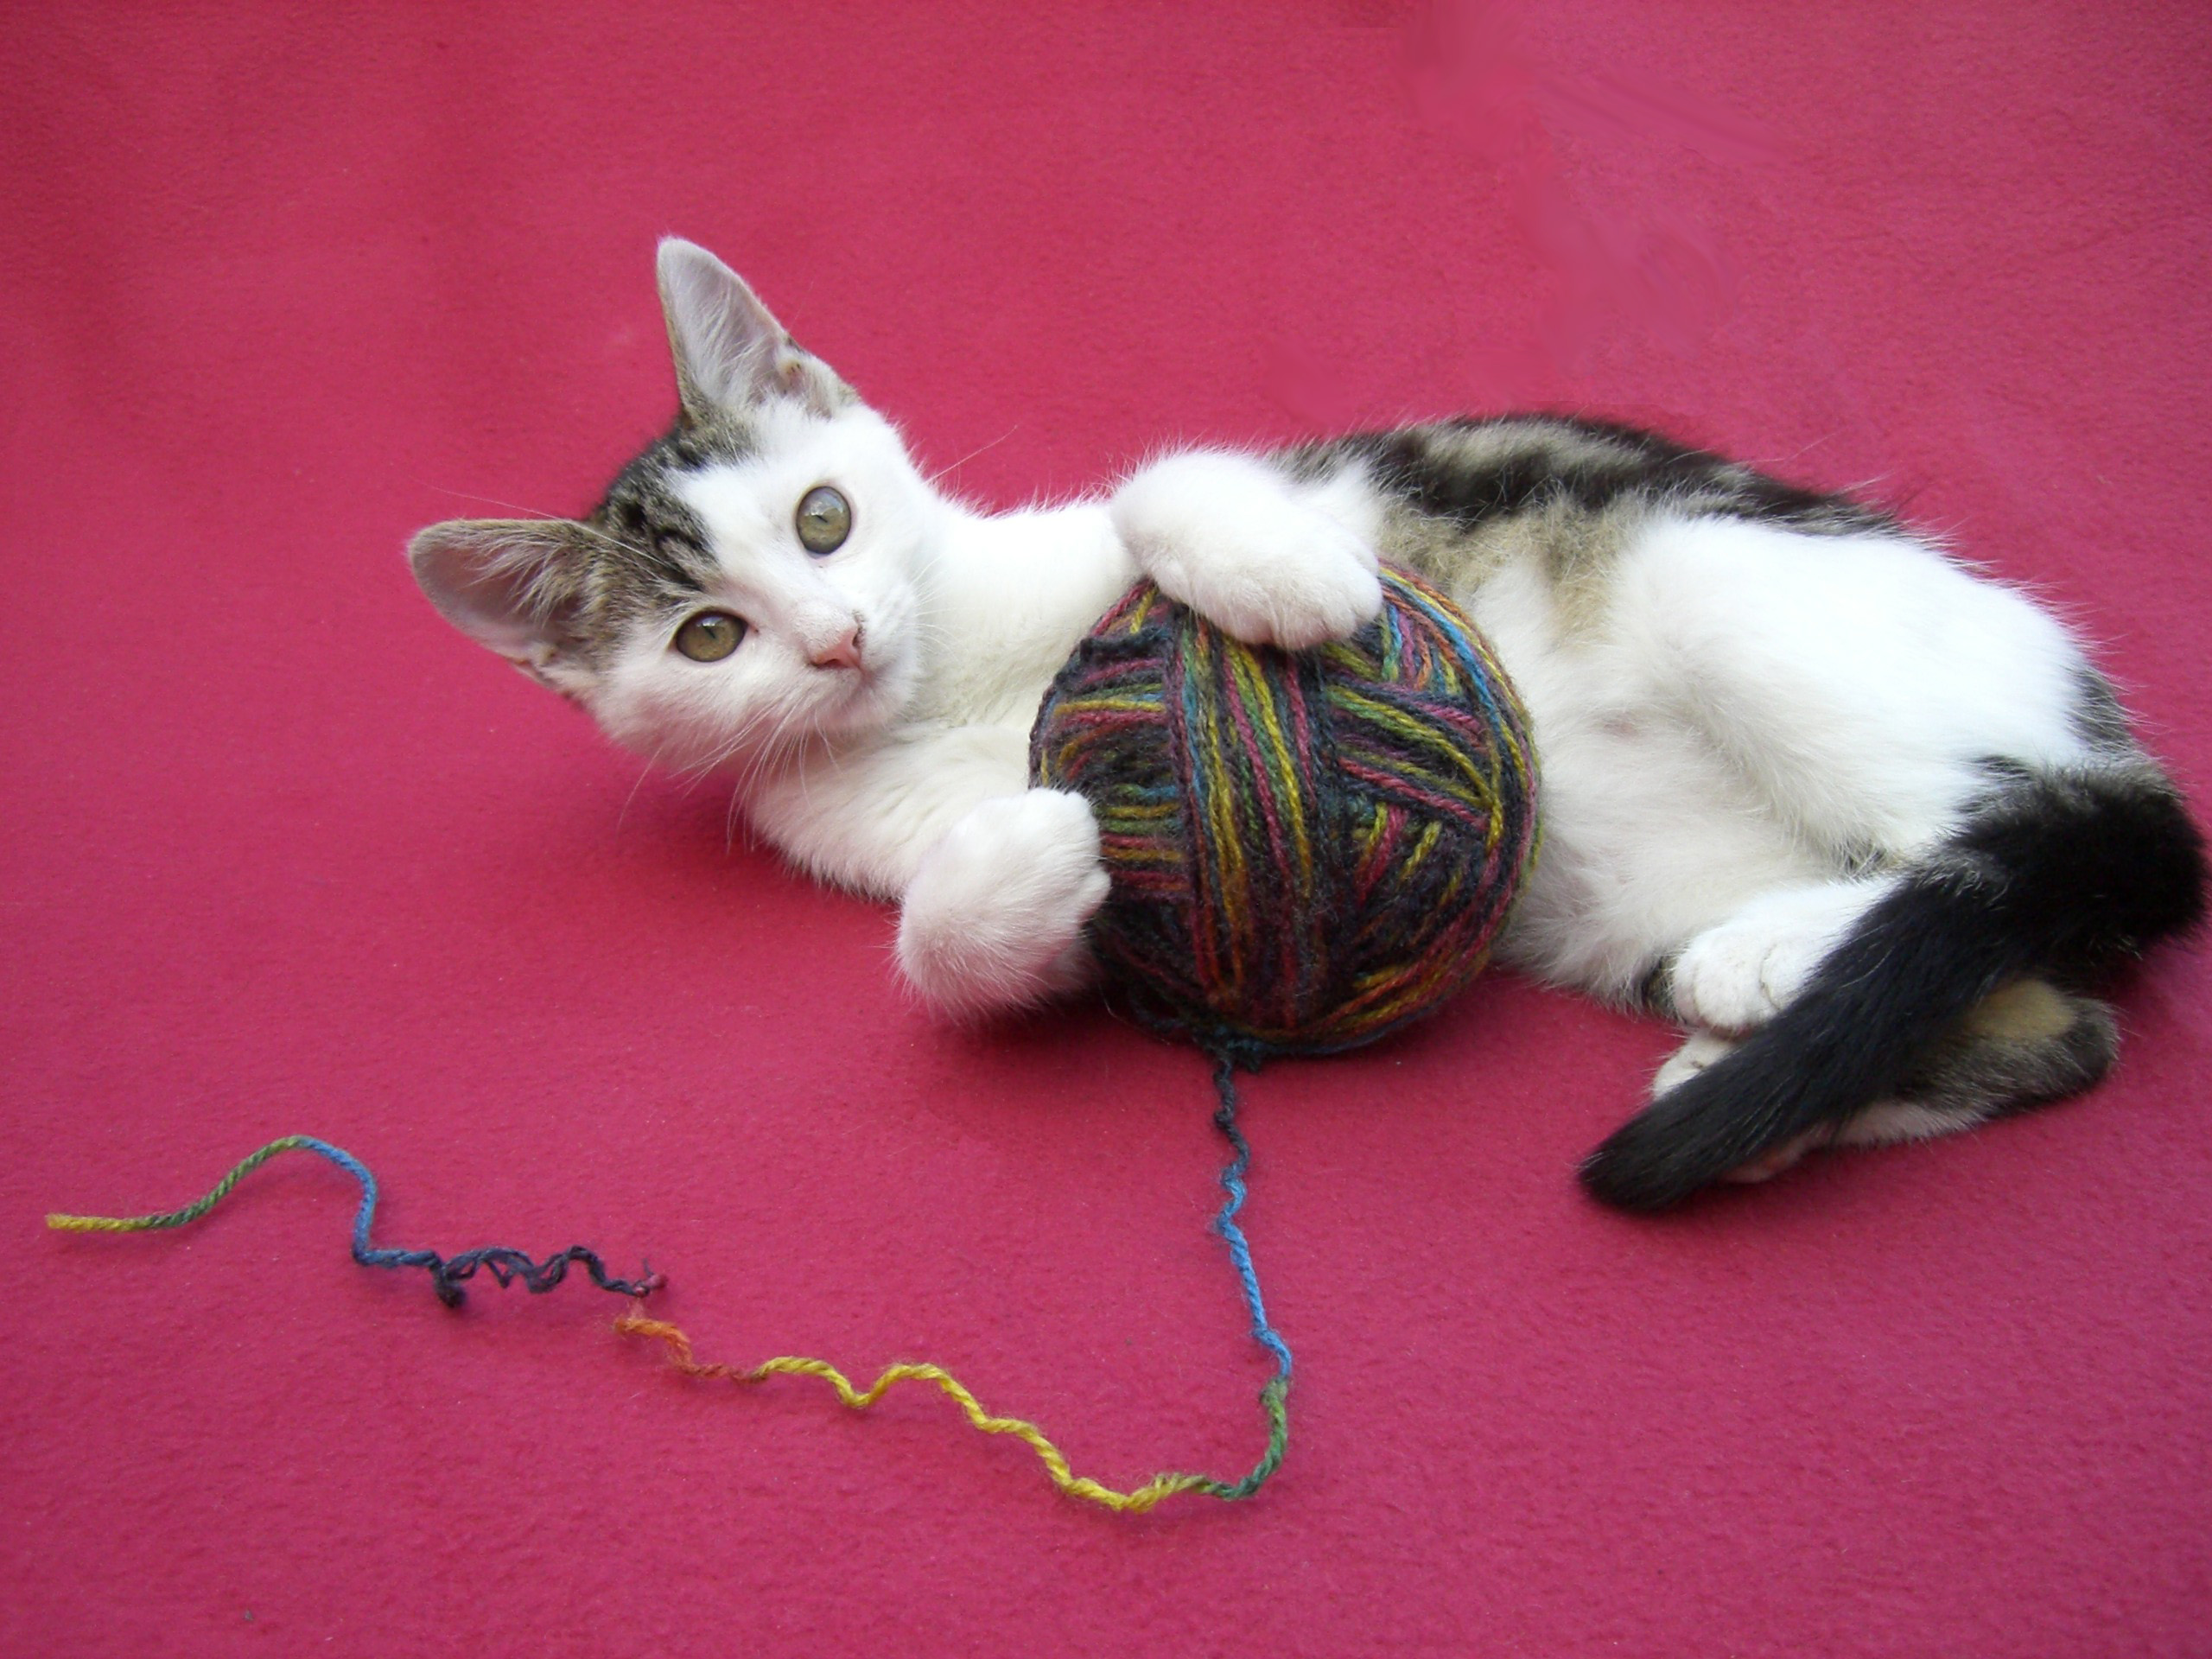 PICT Cat Kitten Yarn Playing - wikimedia